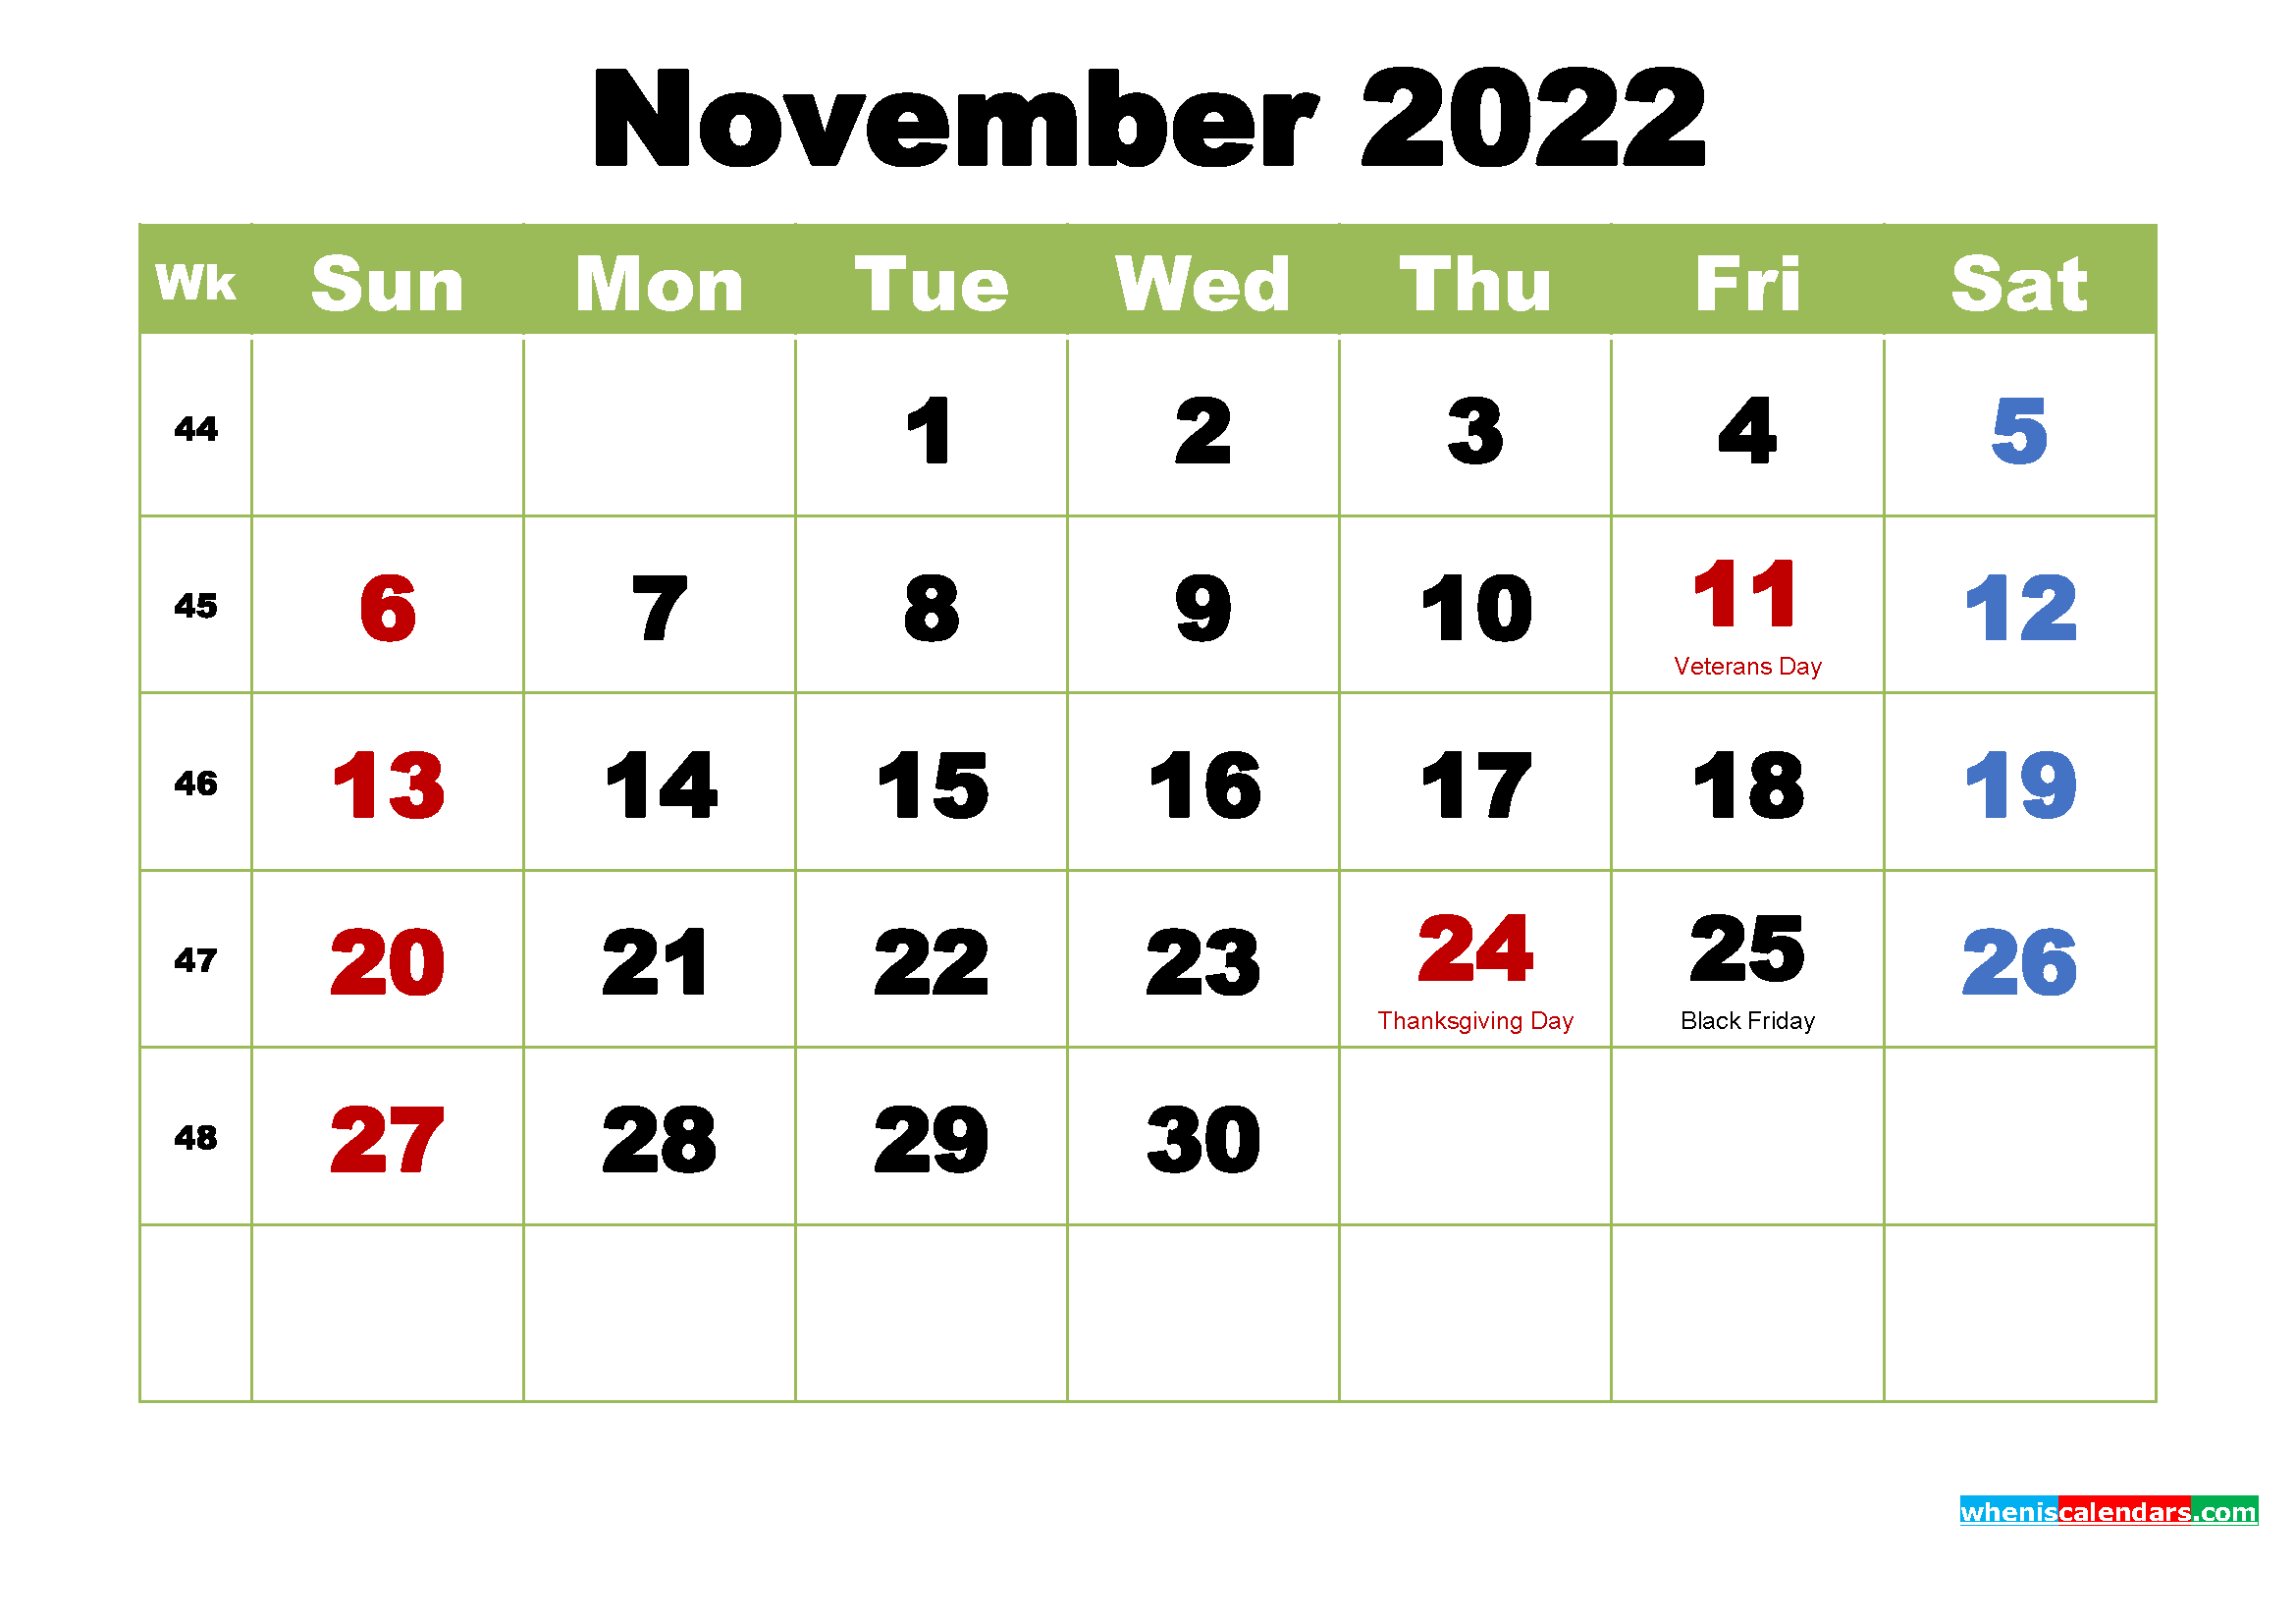 November 2022 Calendar With Holidays Wallpapers